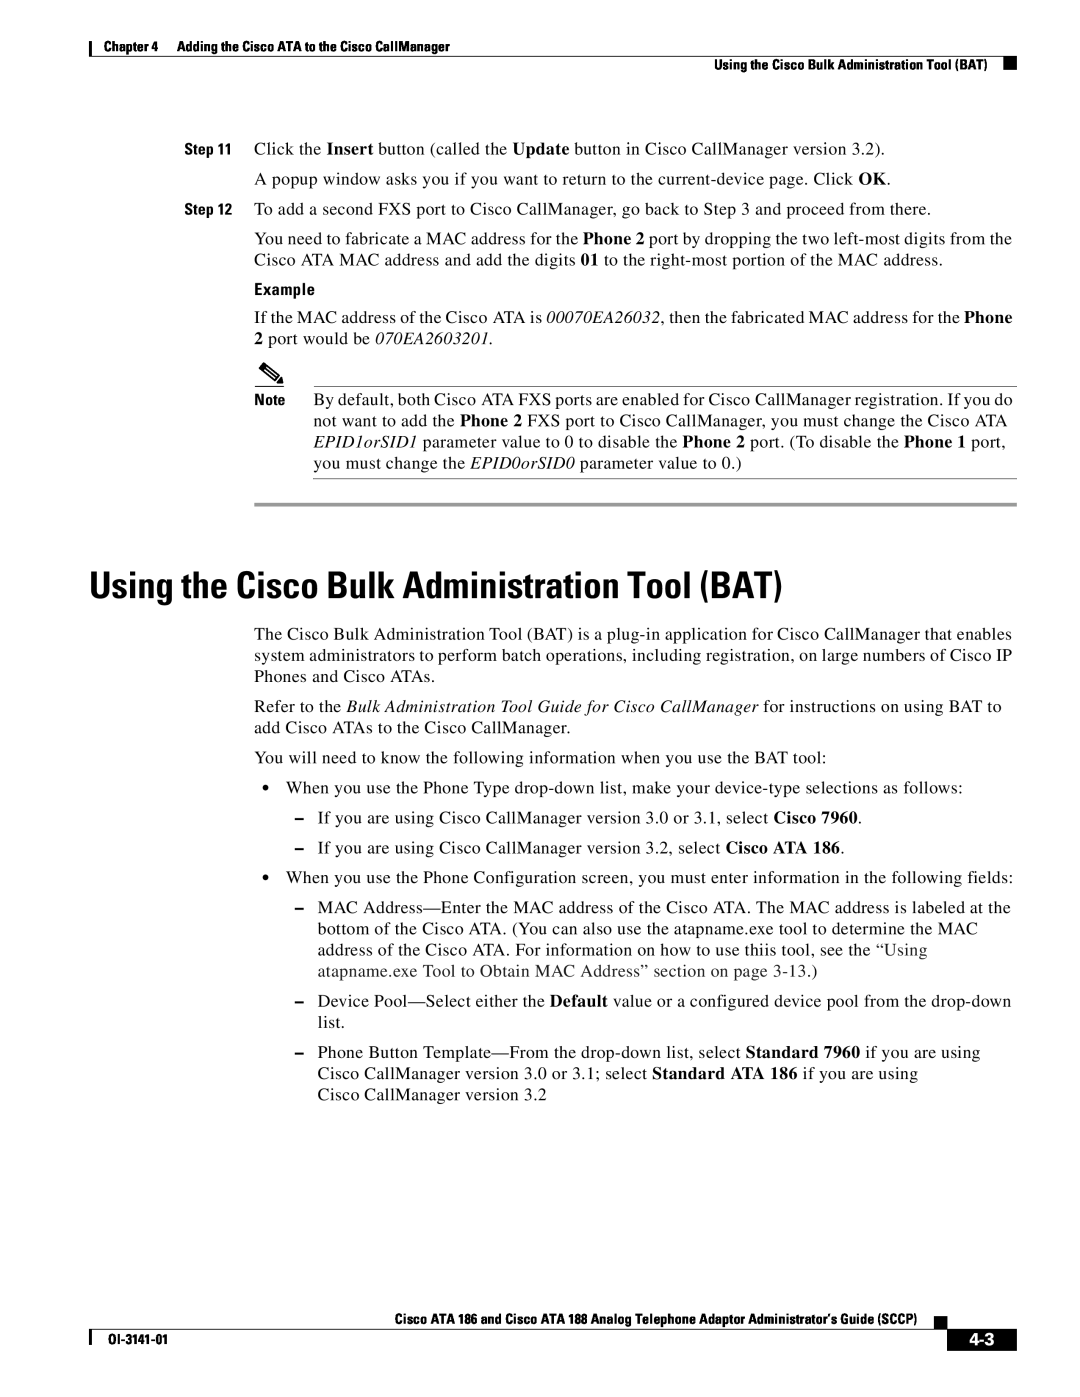 Cisco Systems ATA 188, ATA 186 manual Using the Cisco Bulk Administration Tool BAT, Example 